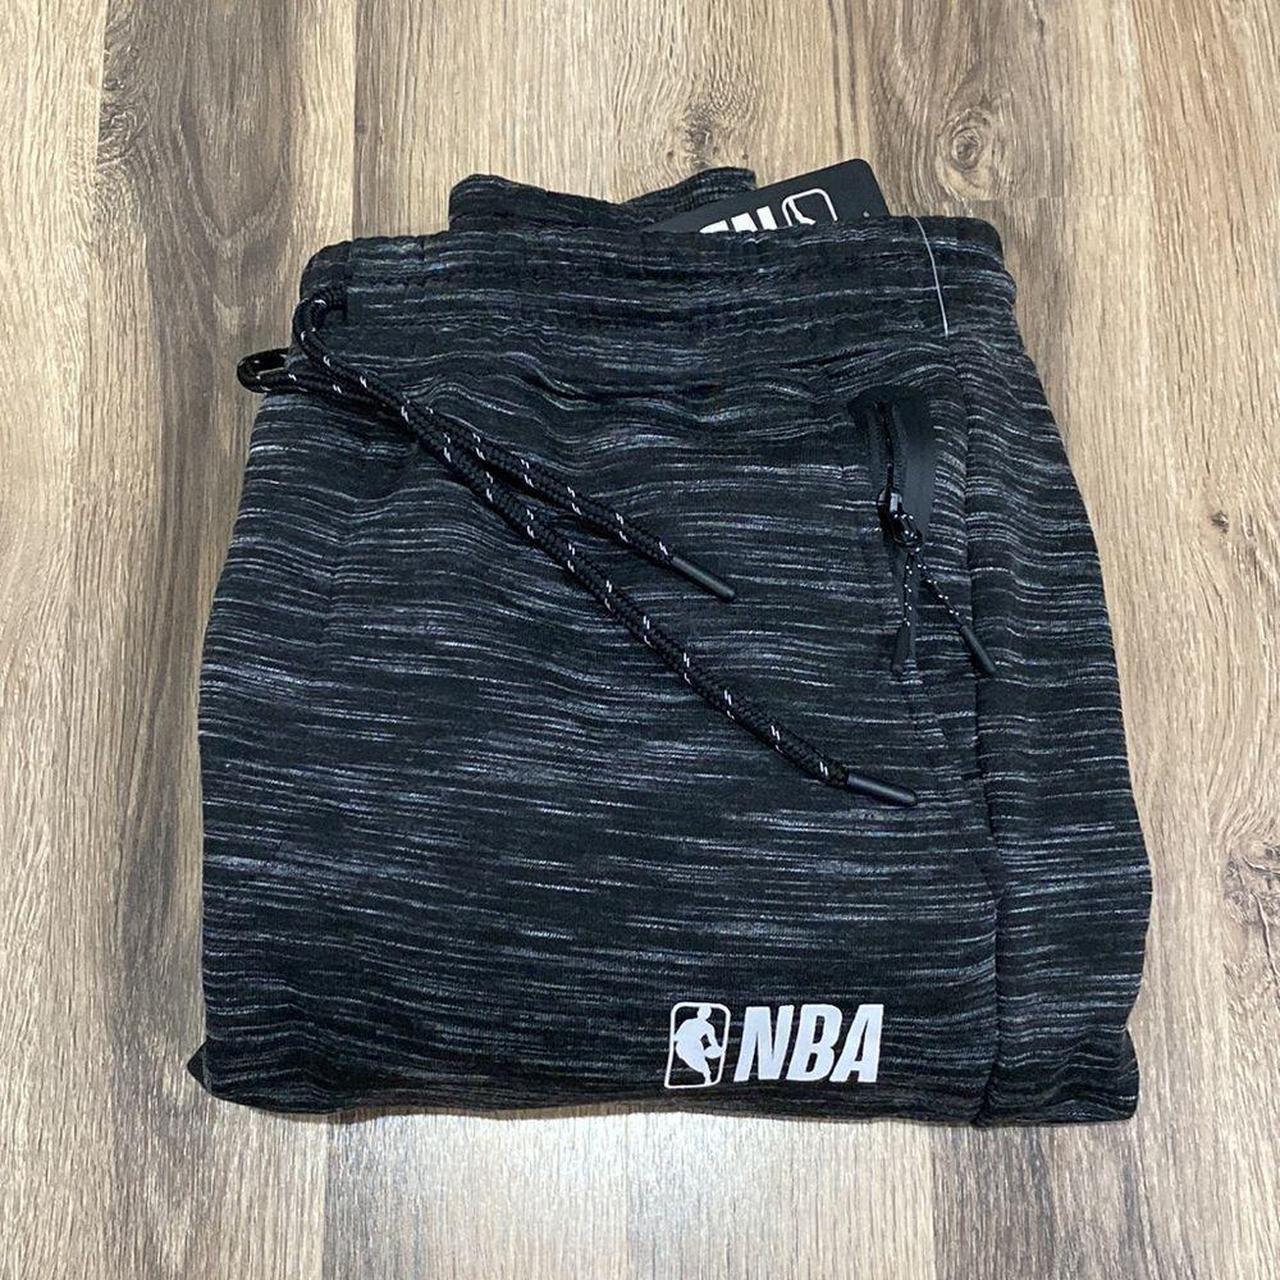 Men's NBA Jogger Basketball Pant Comfort Fit Net-Dry - Depop